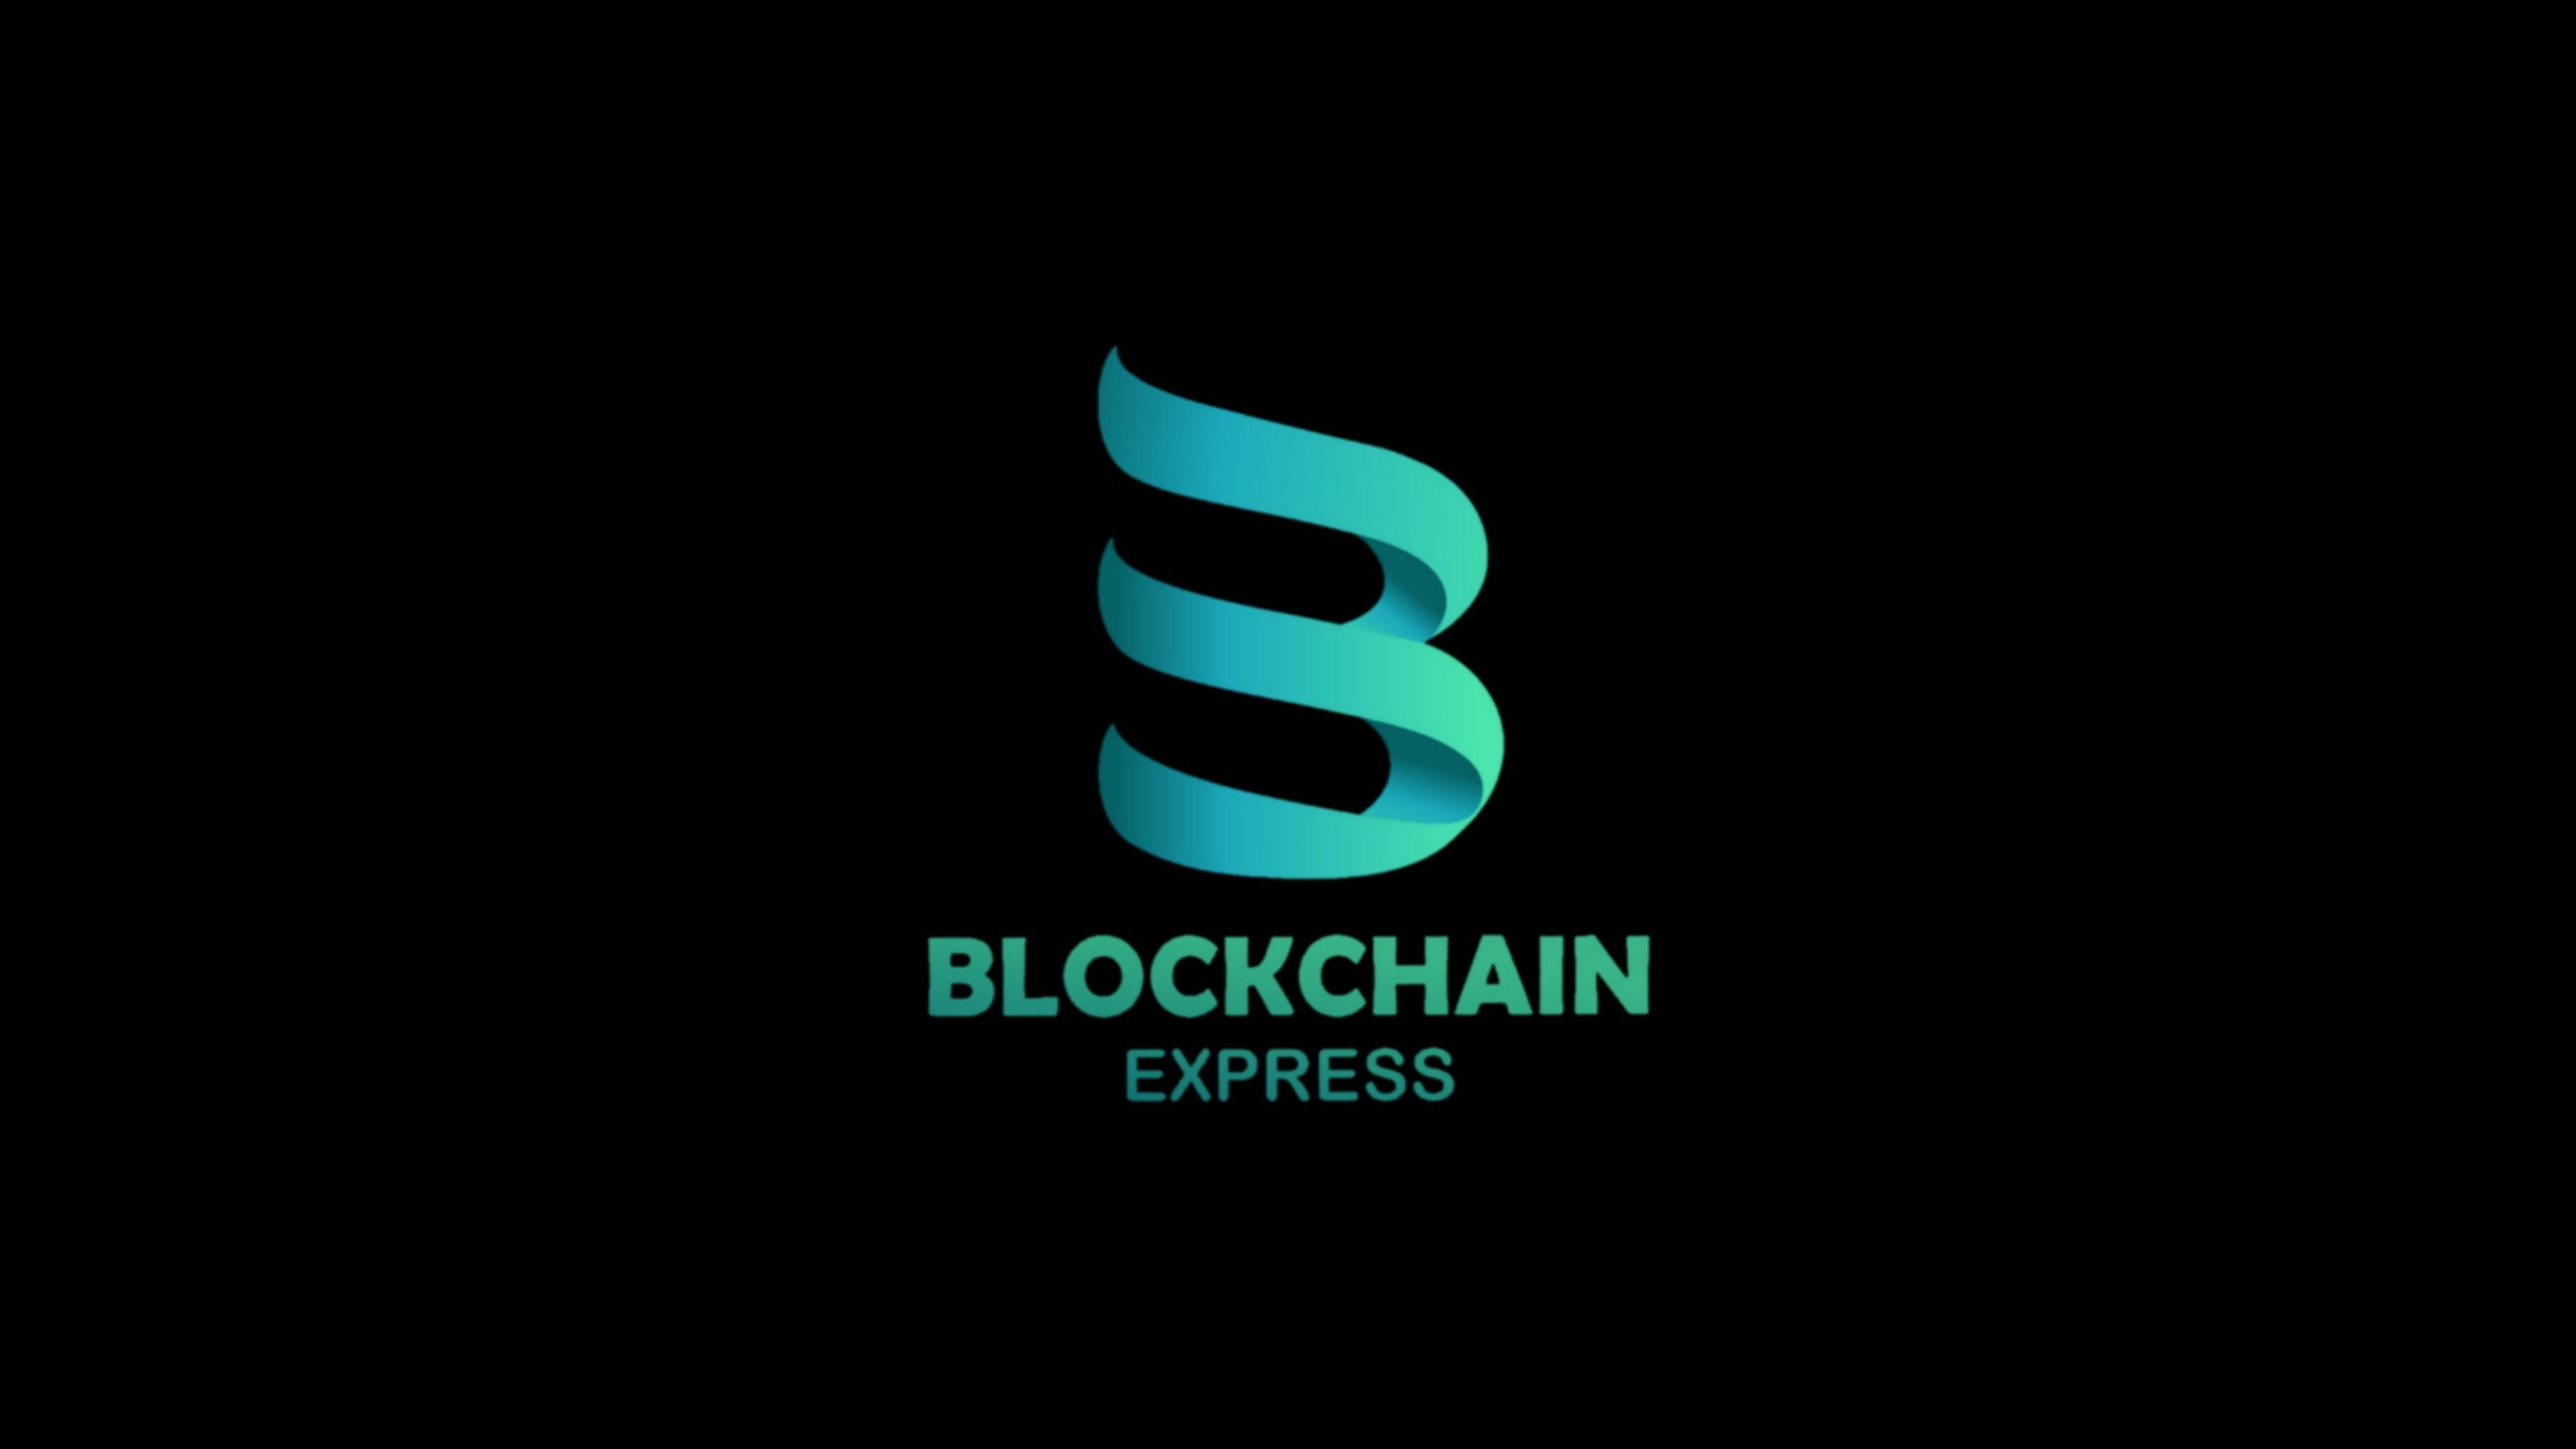 Blockchain Express live now...